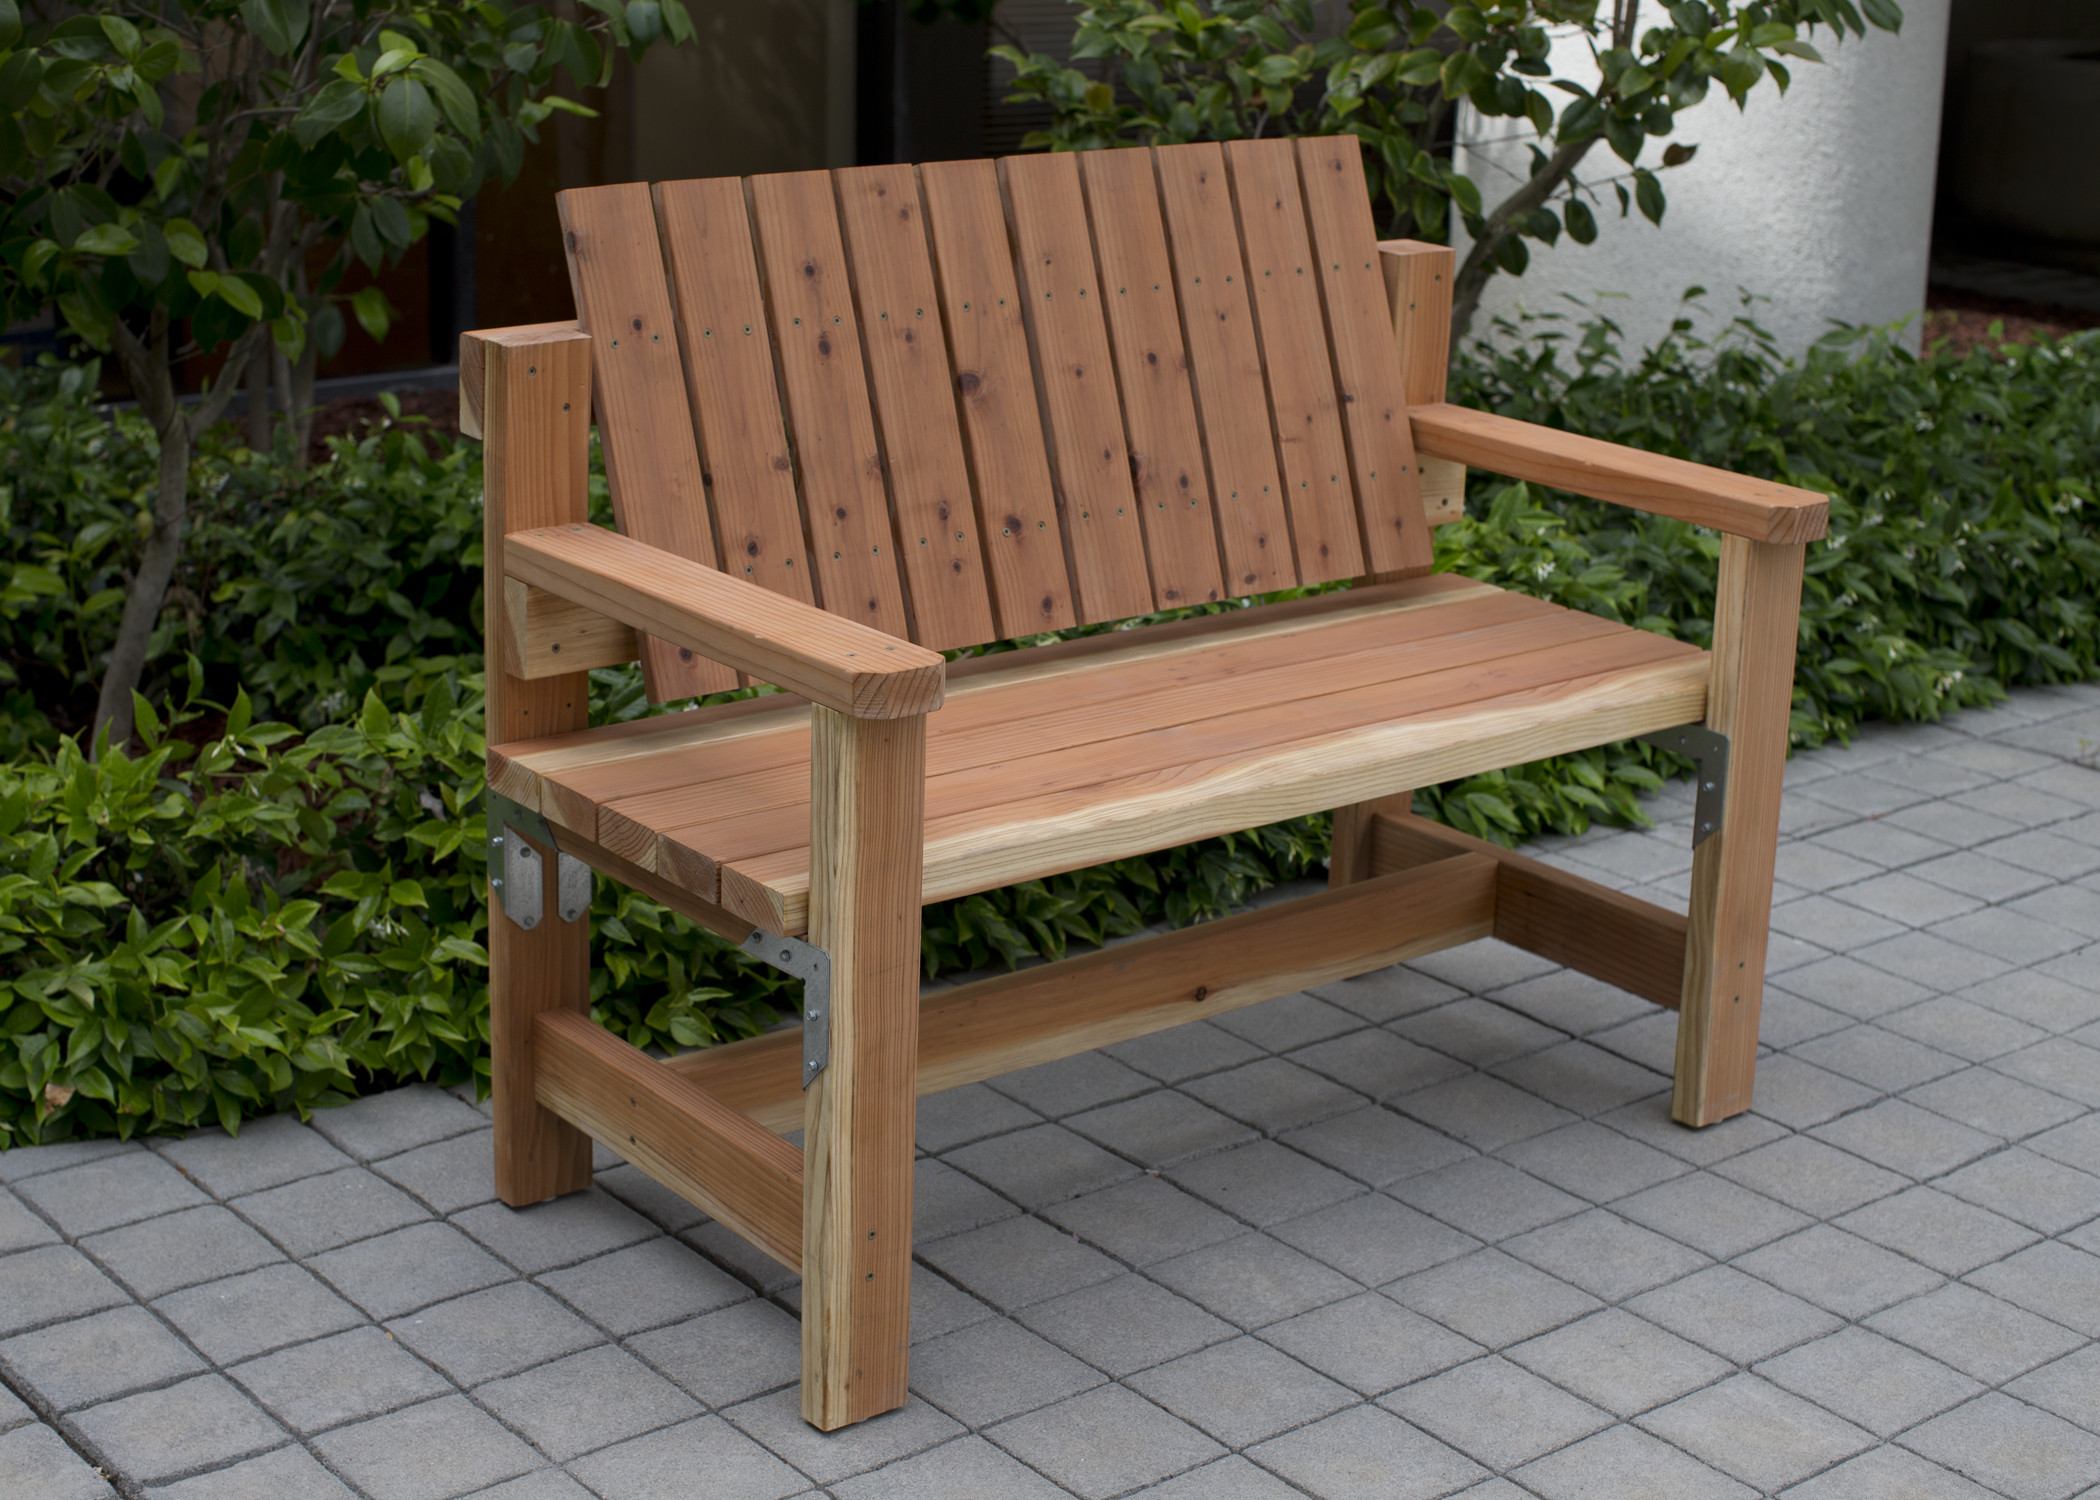 DIY Outdoor Wooden Benches
 DIY Garden Bench Part 1 DIY Done Right